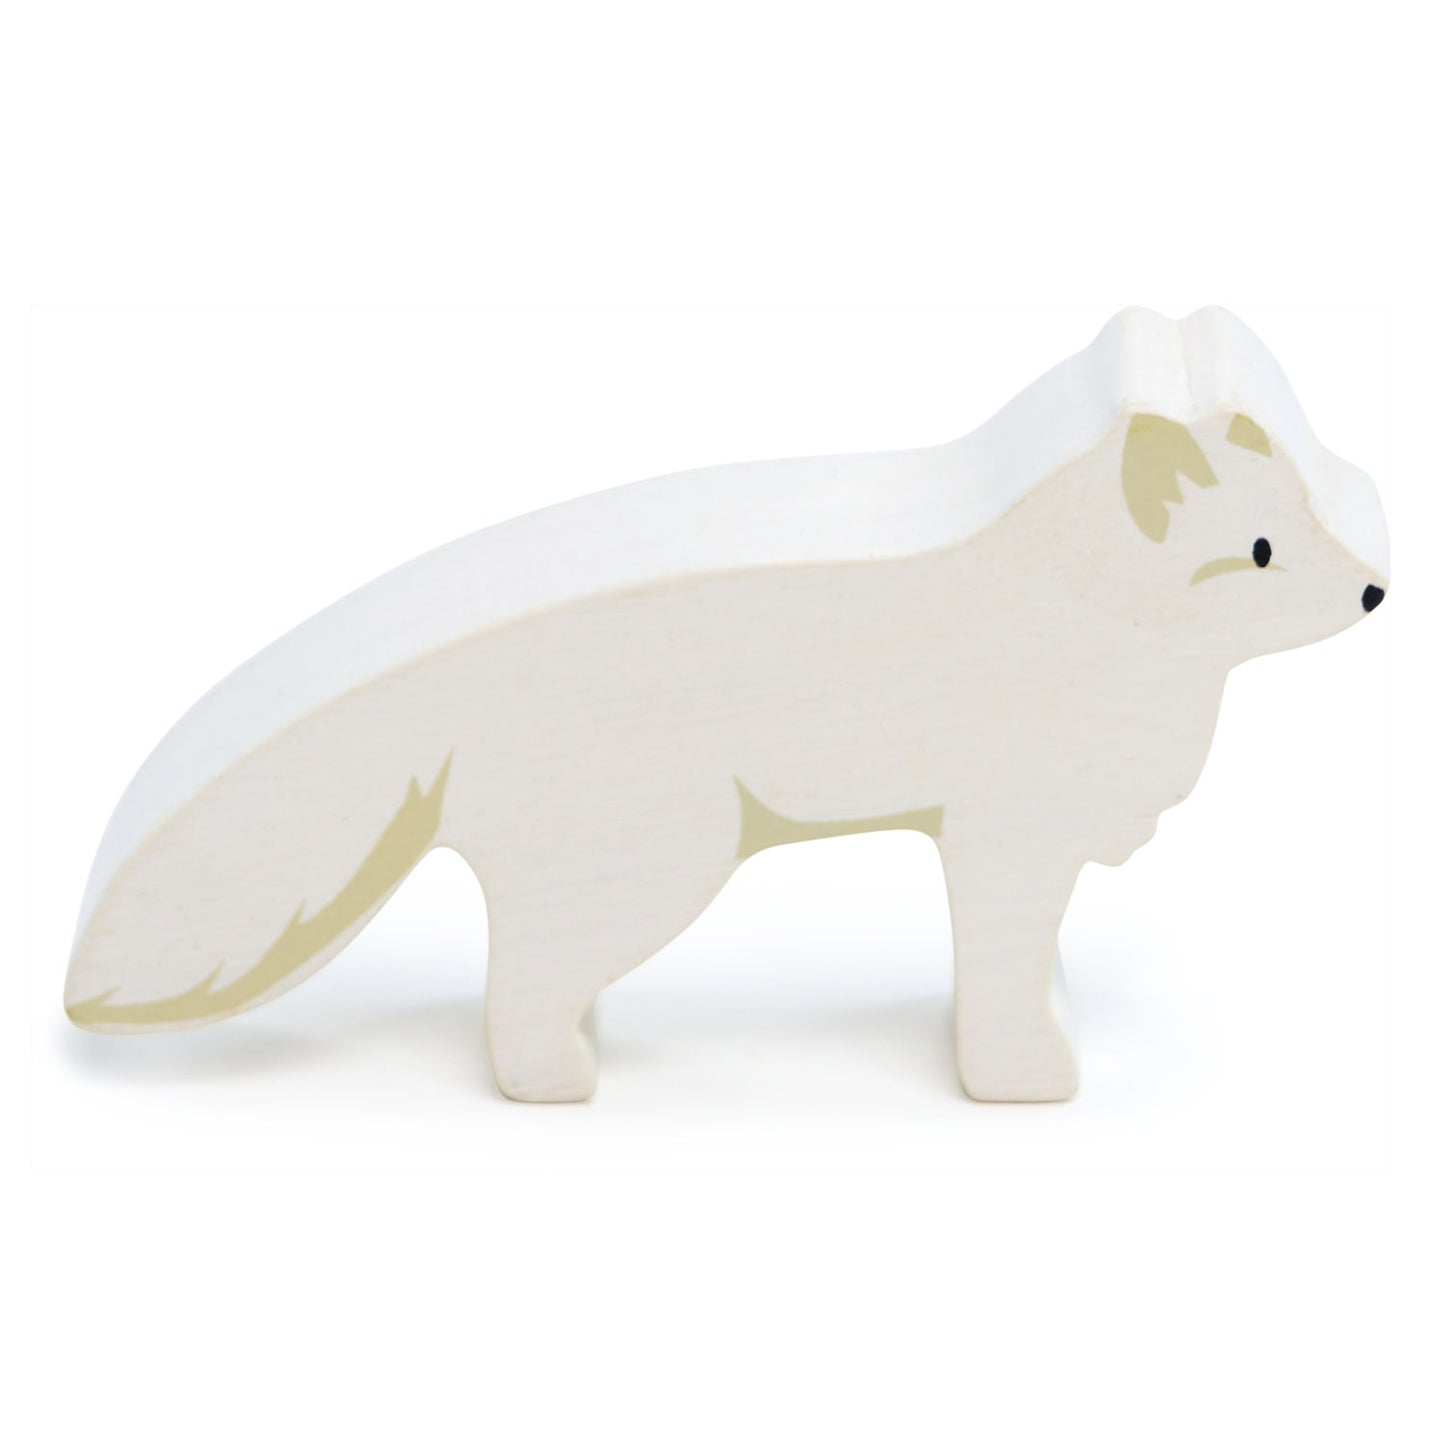 Tenderleaf Toys Arctic Fox Wooden Figure